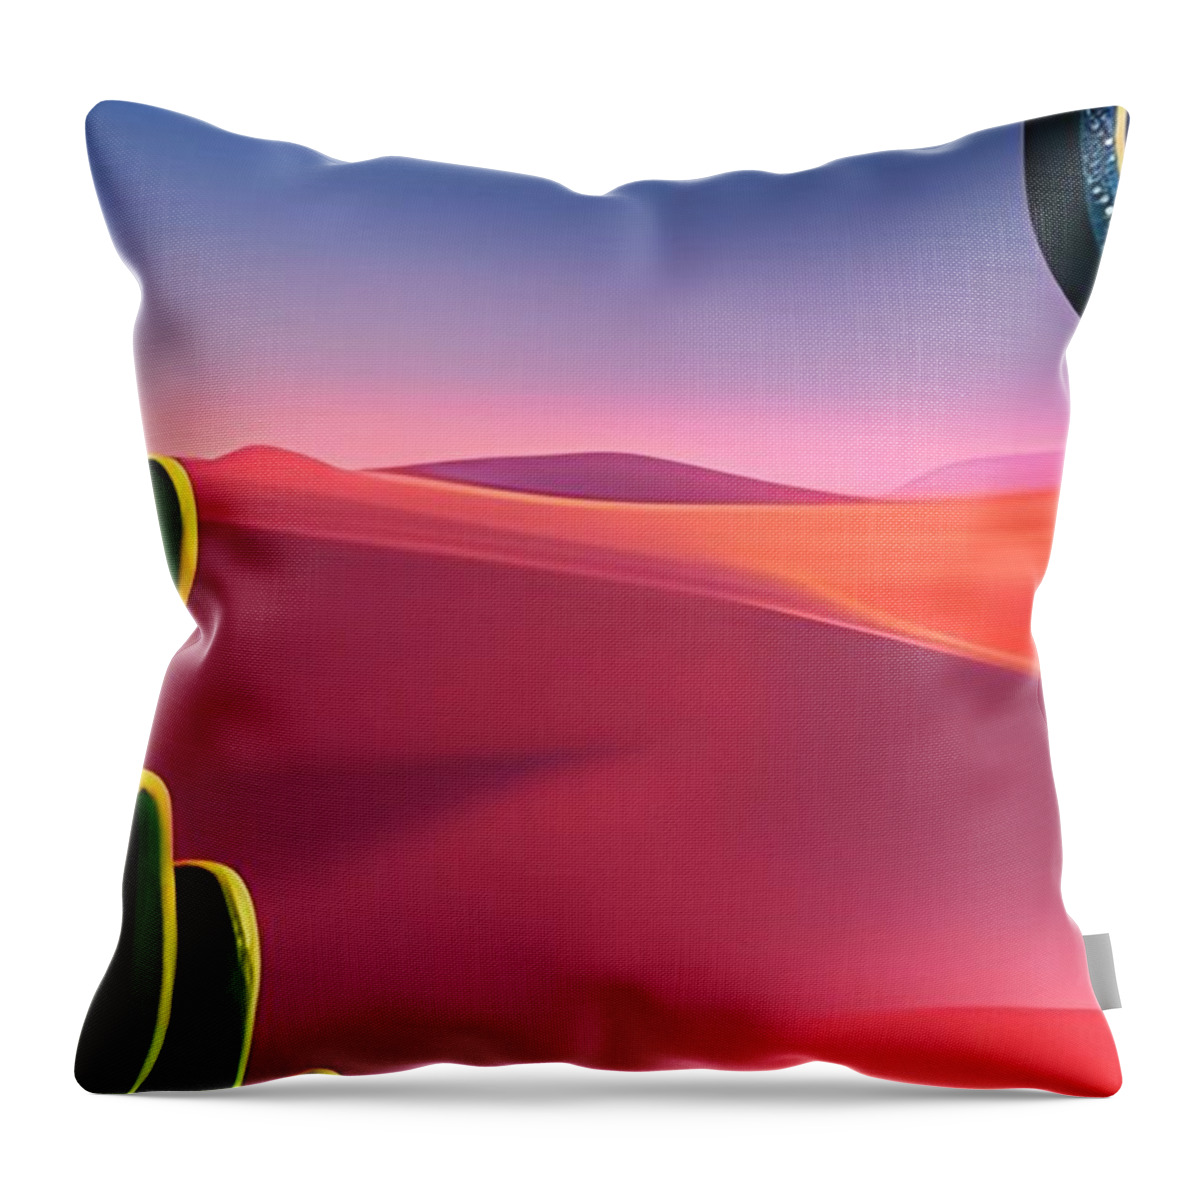 Dusk Throw Pillow featuring the digital art Desert at Dusk II by Bonnie Bruno